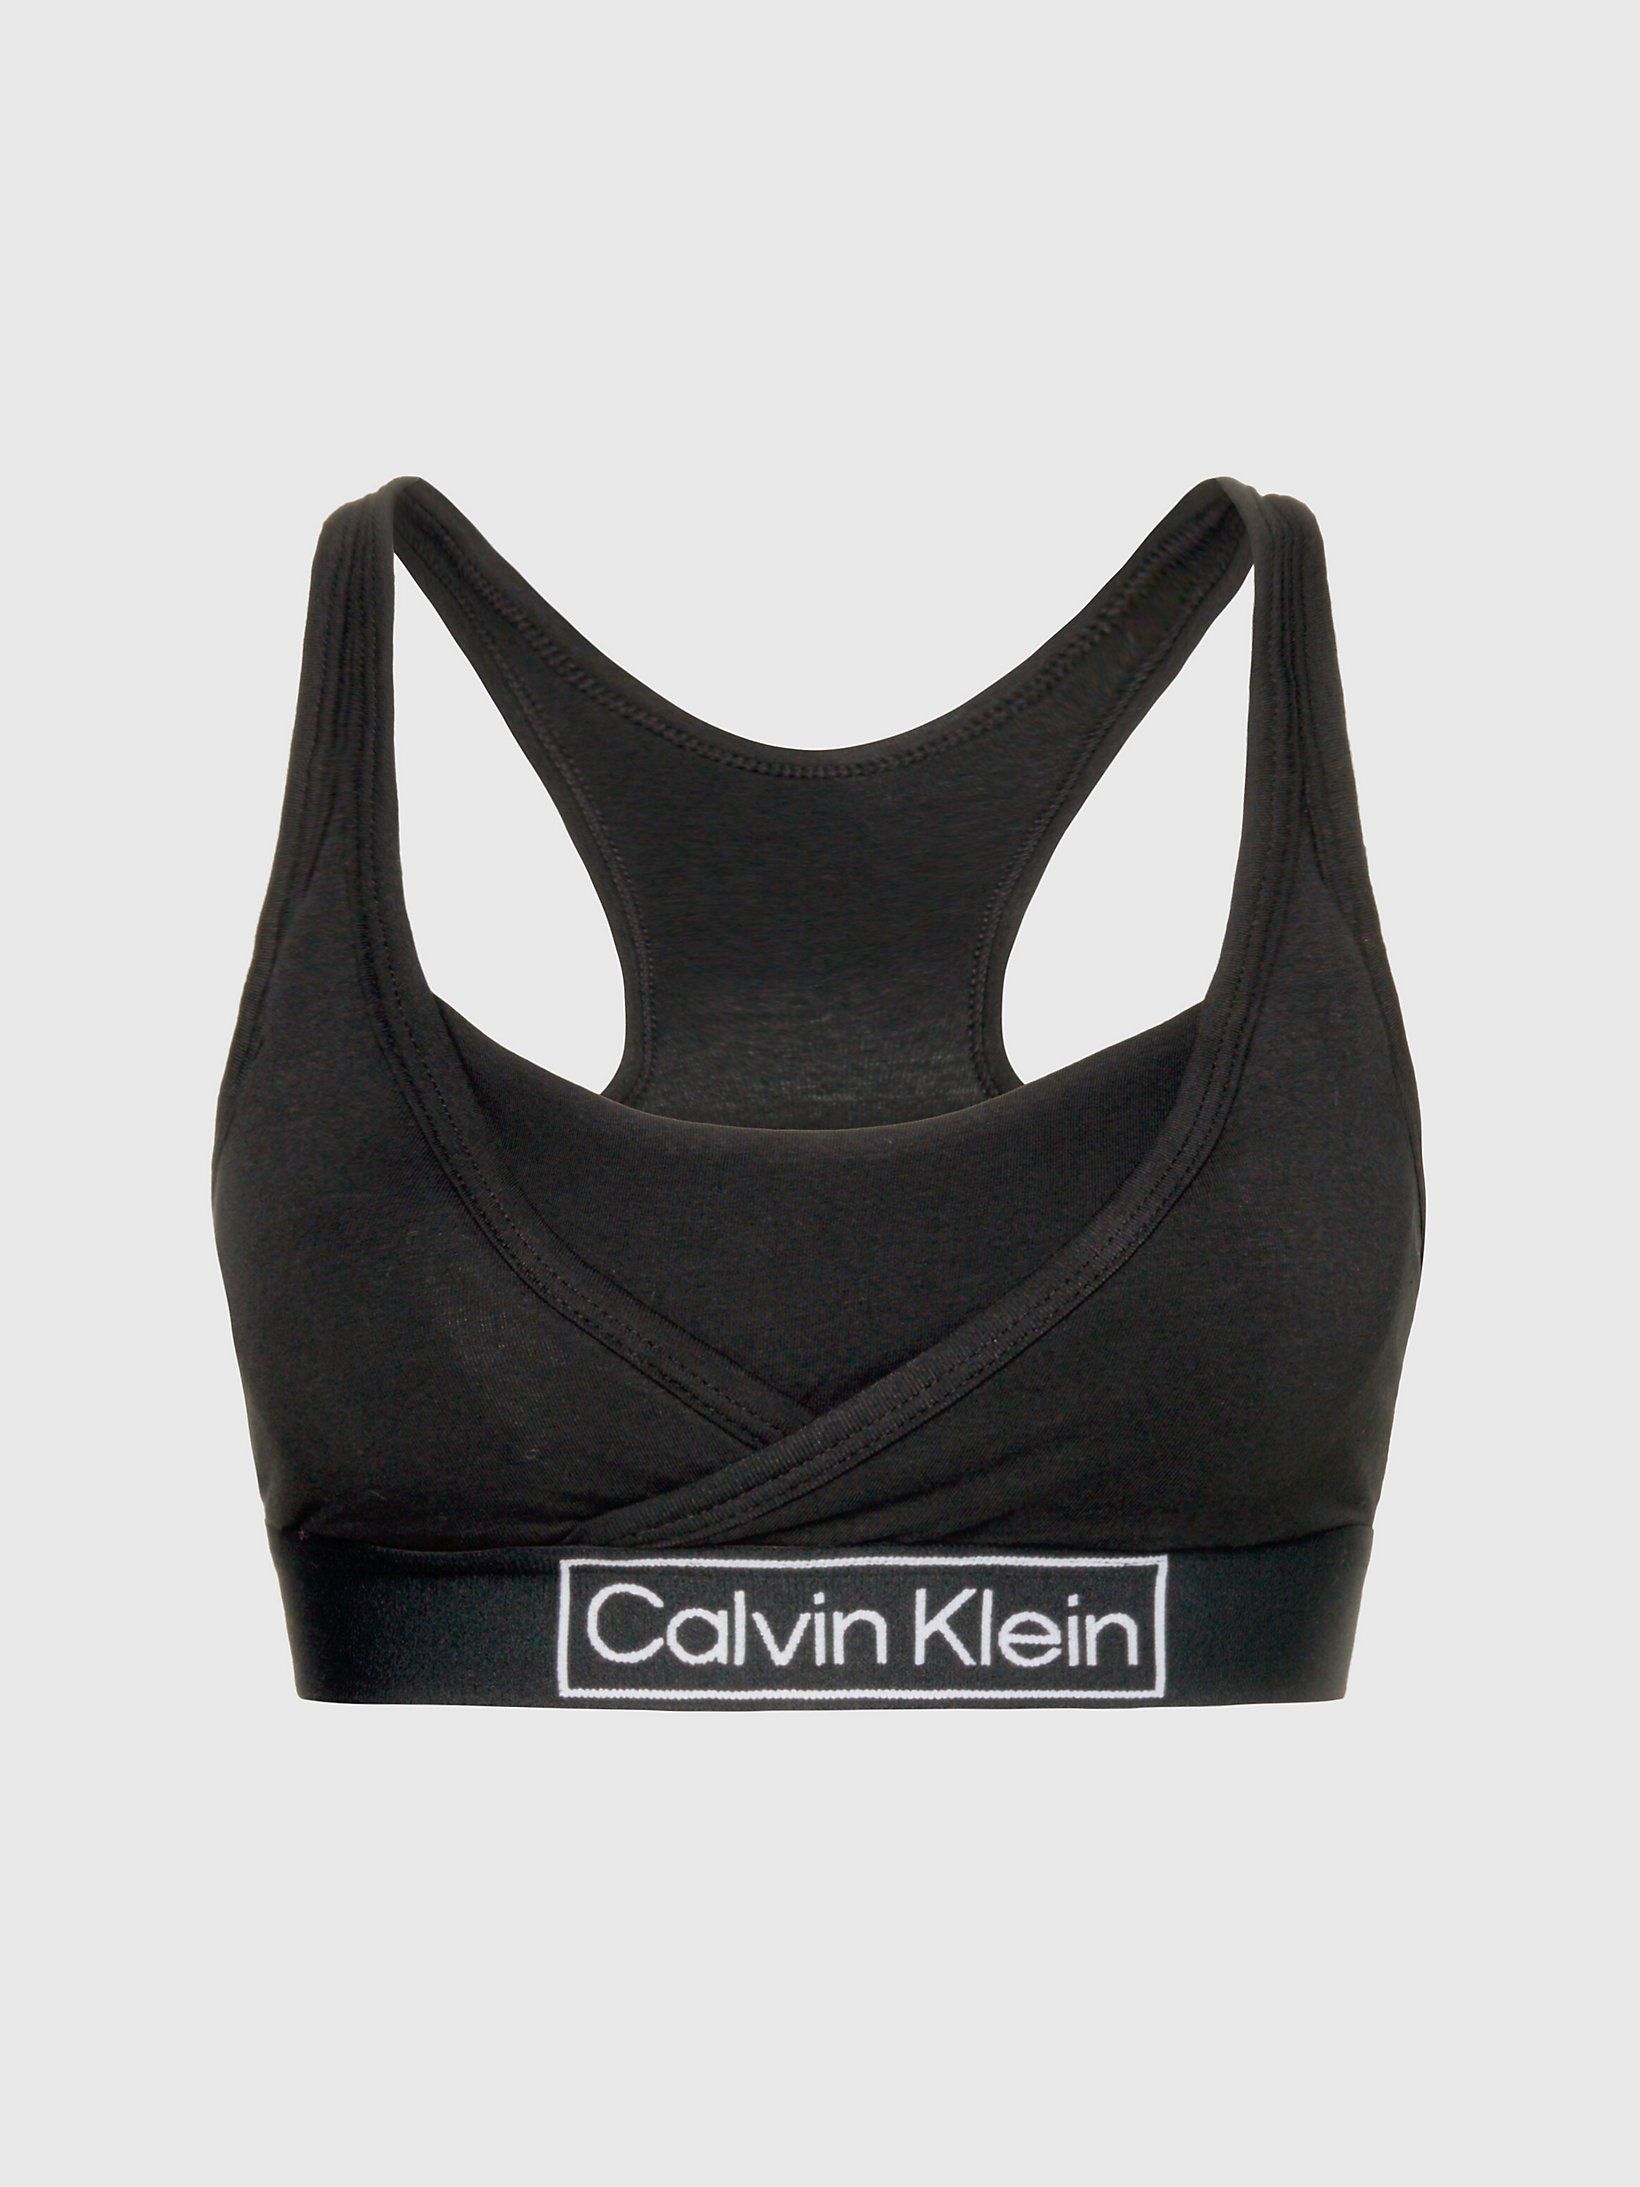 Black > Бюстгальтер для кормления - Reimagined Heritage > undefined Женщины - Calvin Klein